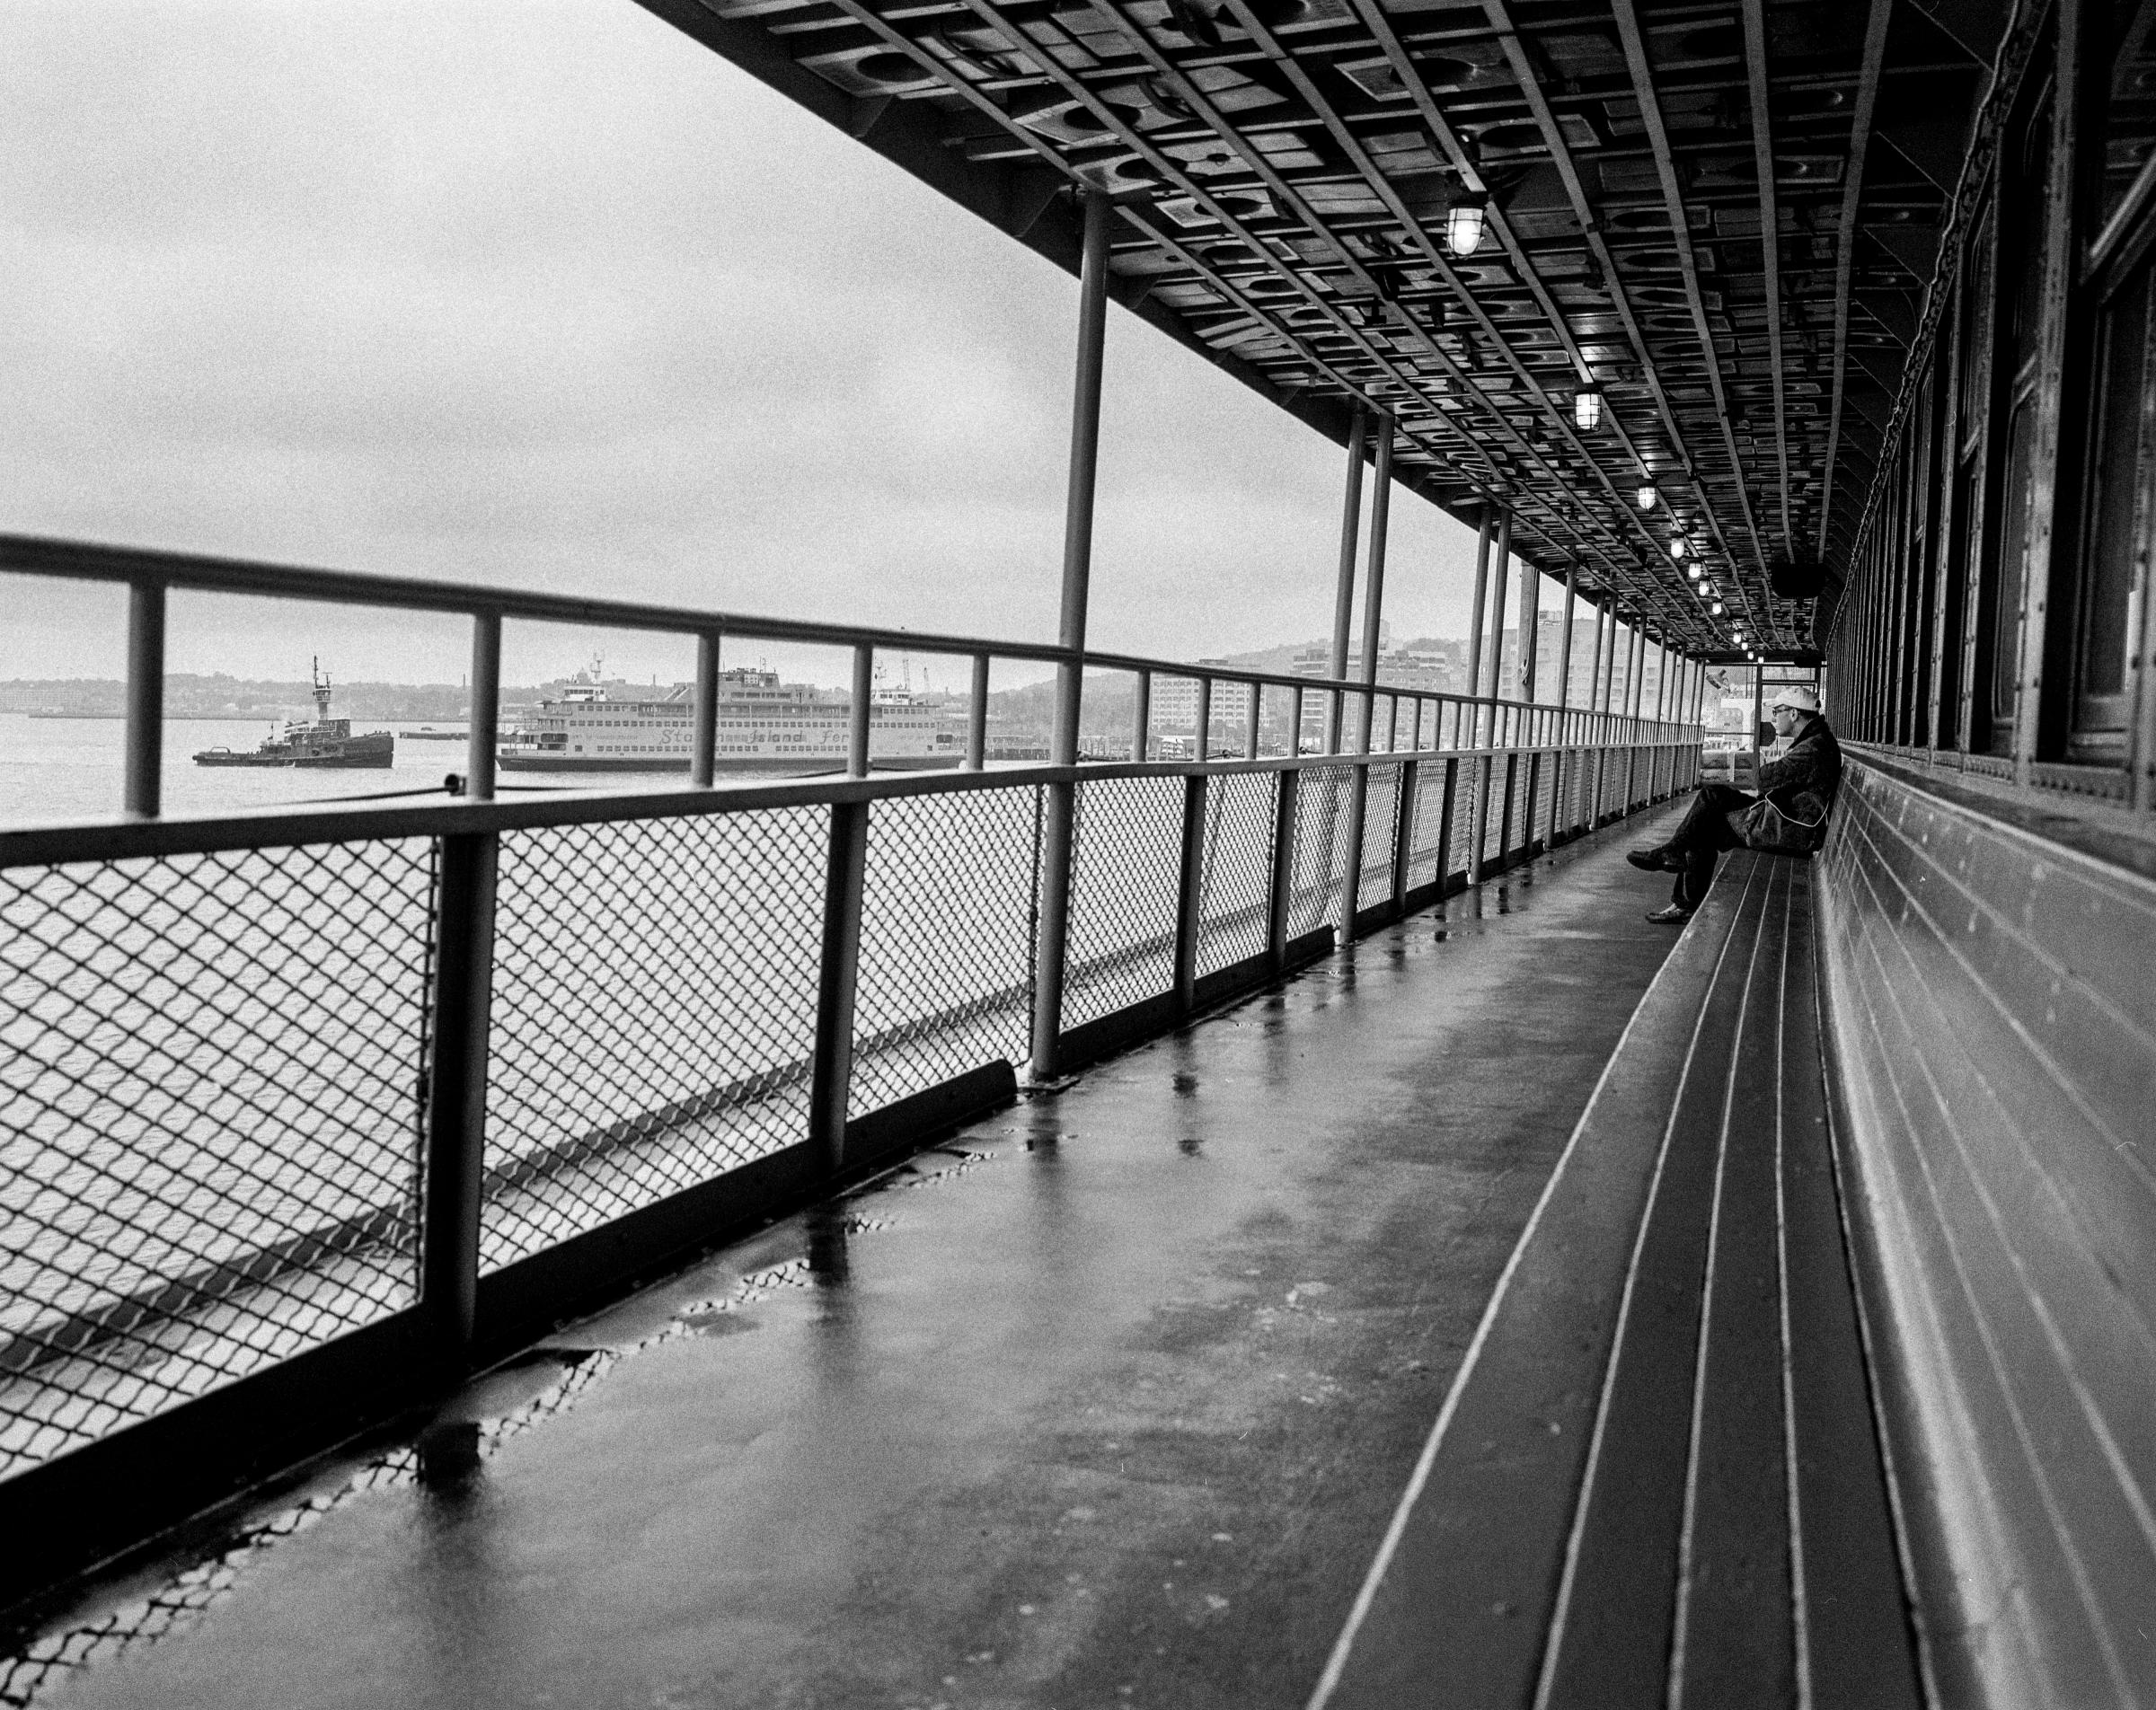 Street Photography/BW Works -  Staten Island Ferry, May 2, 2012  New York Bay 